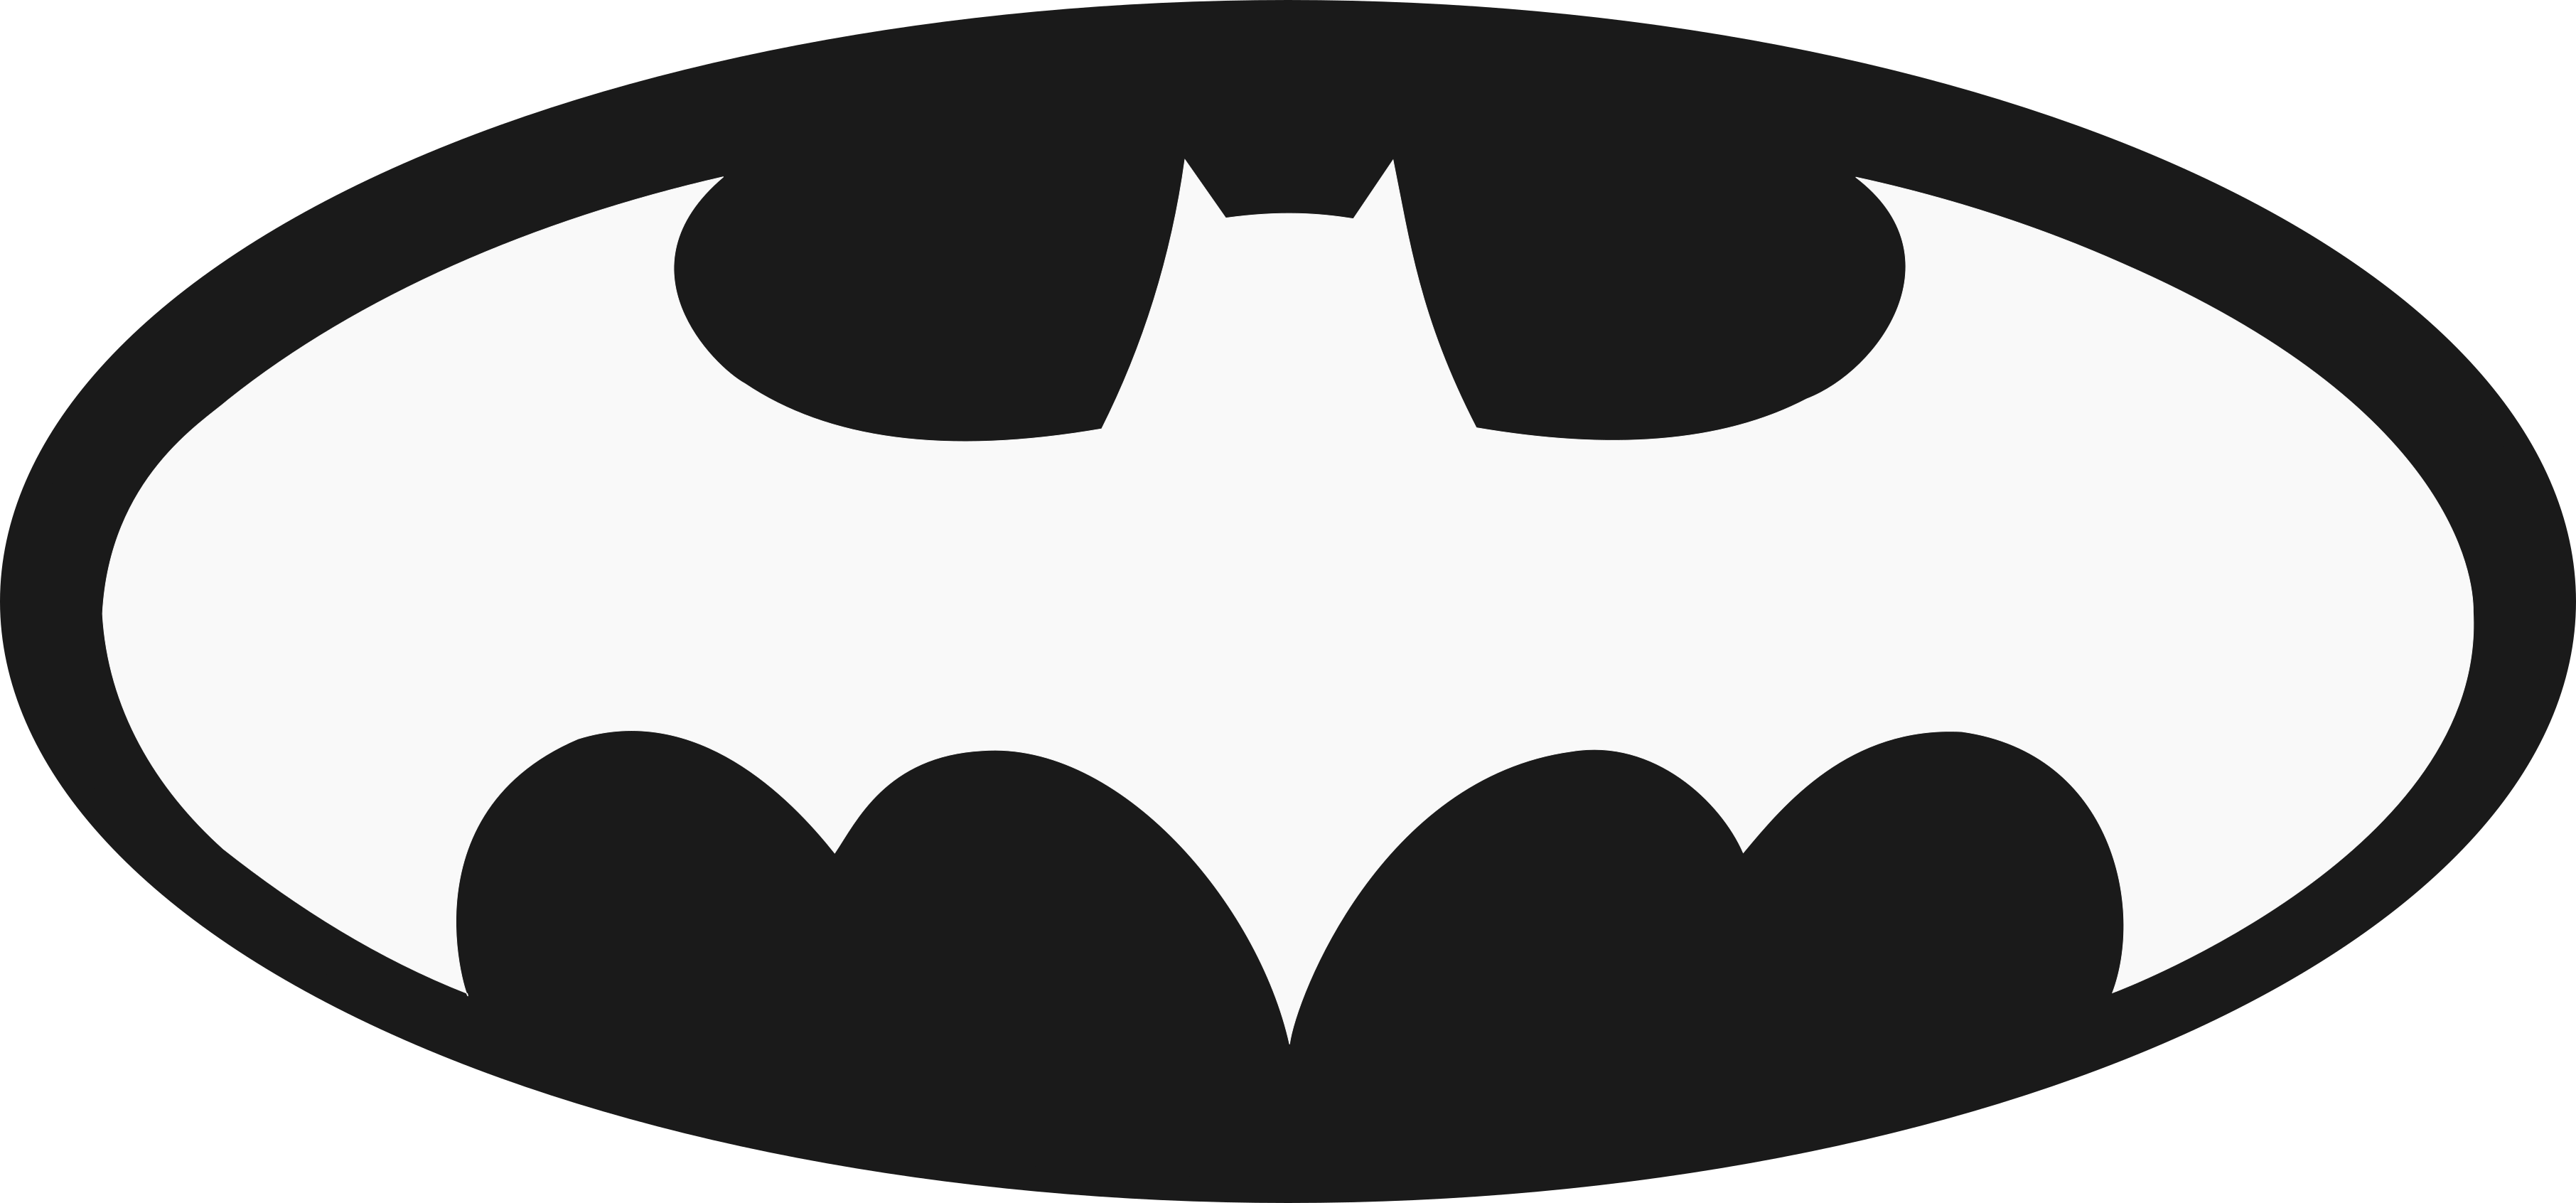 Batman Logo Drawing YouTube - bat png download - 3624*1692 - Free ...